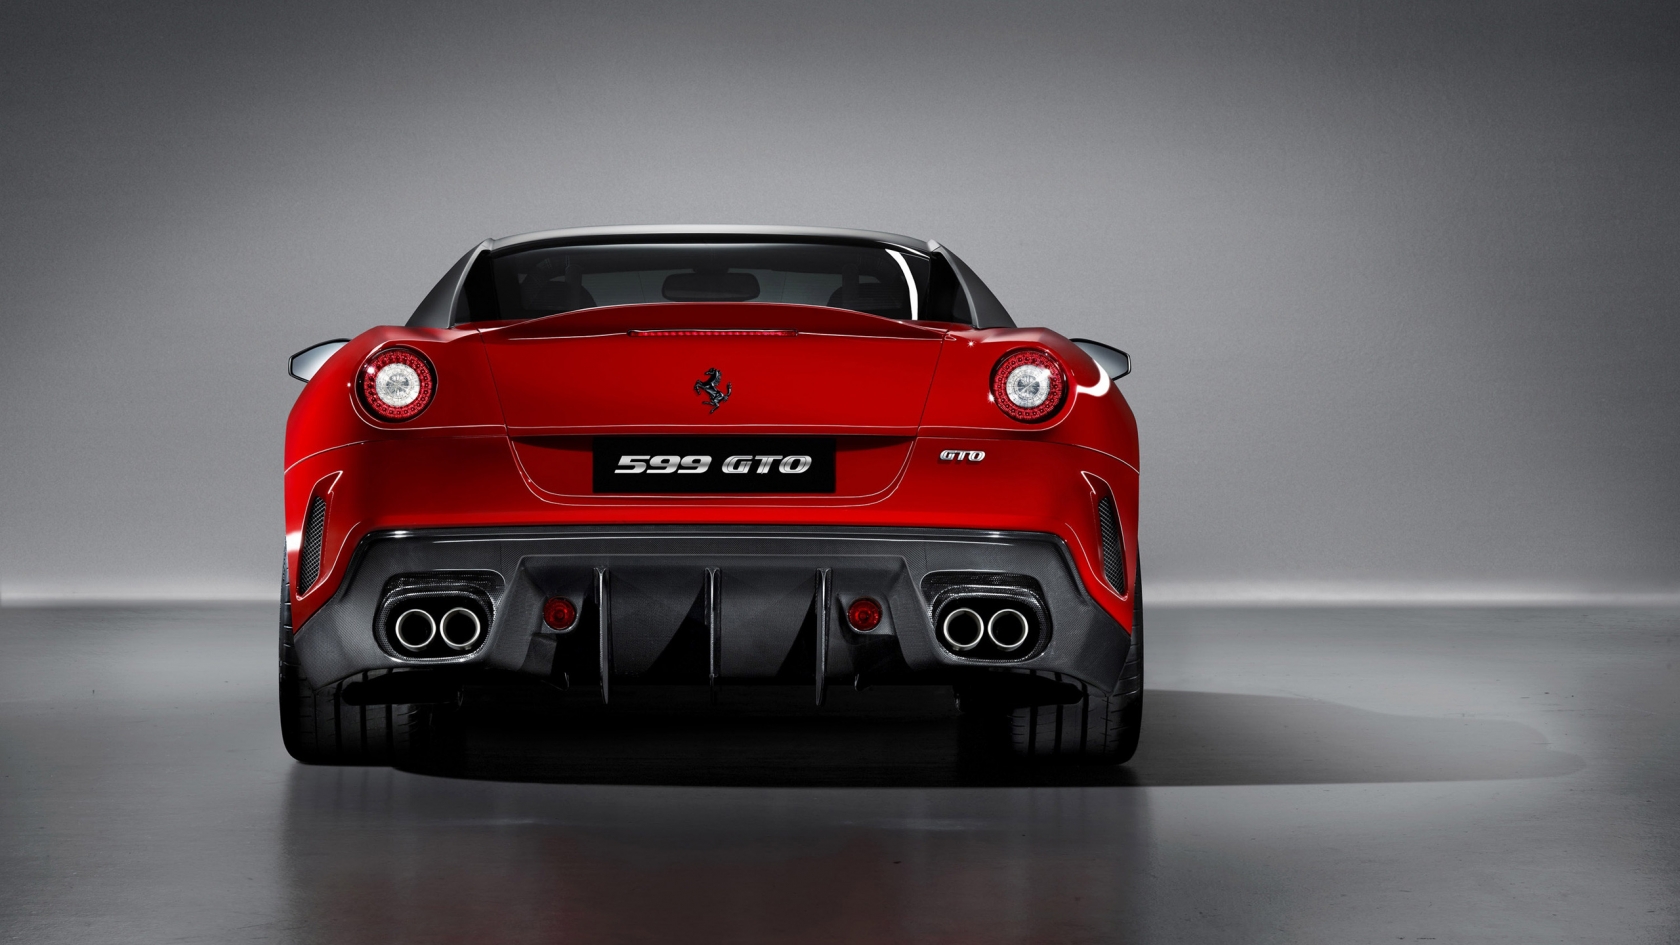 Ferrari 599 GTO Rear for 1680 x 945 HDTV resolution